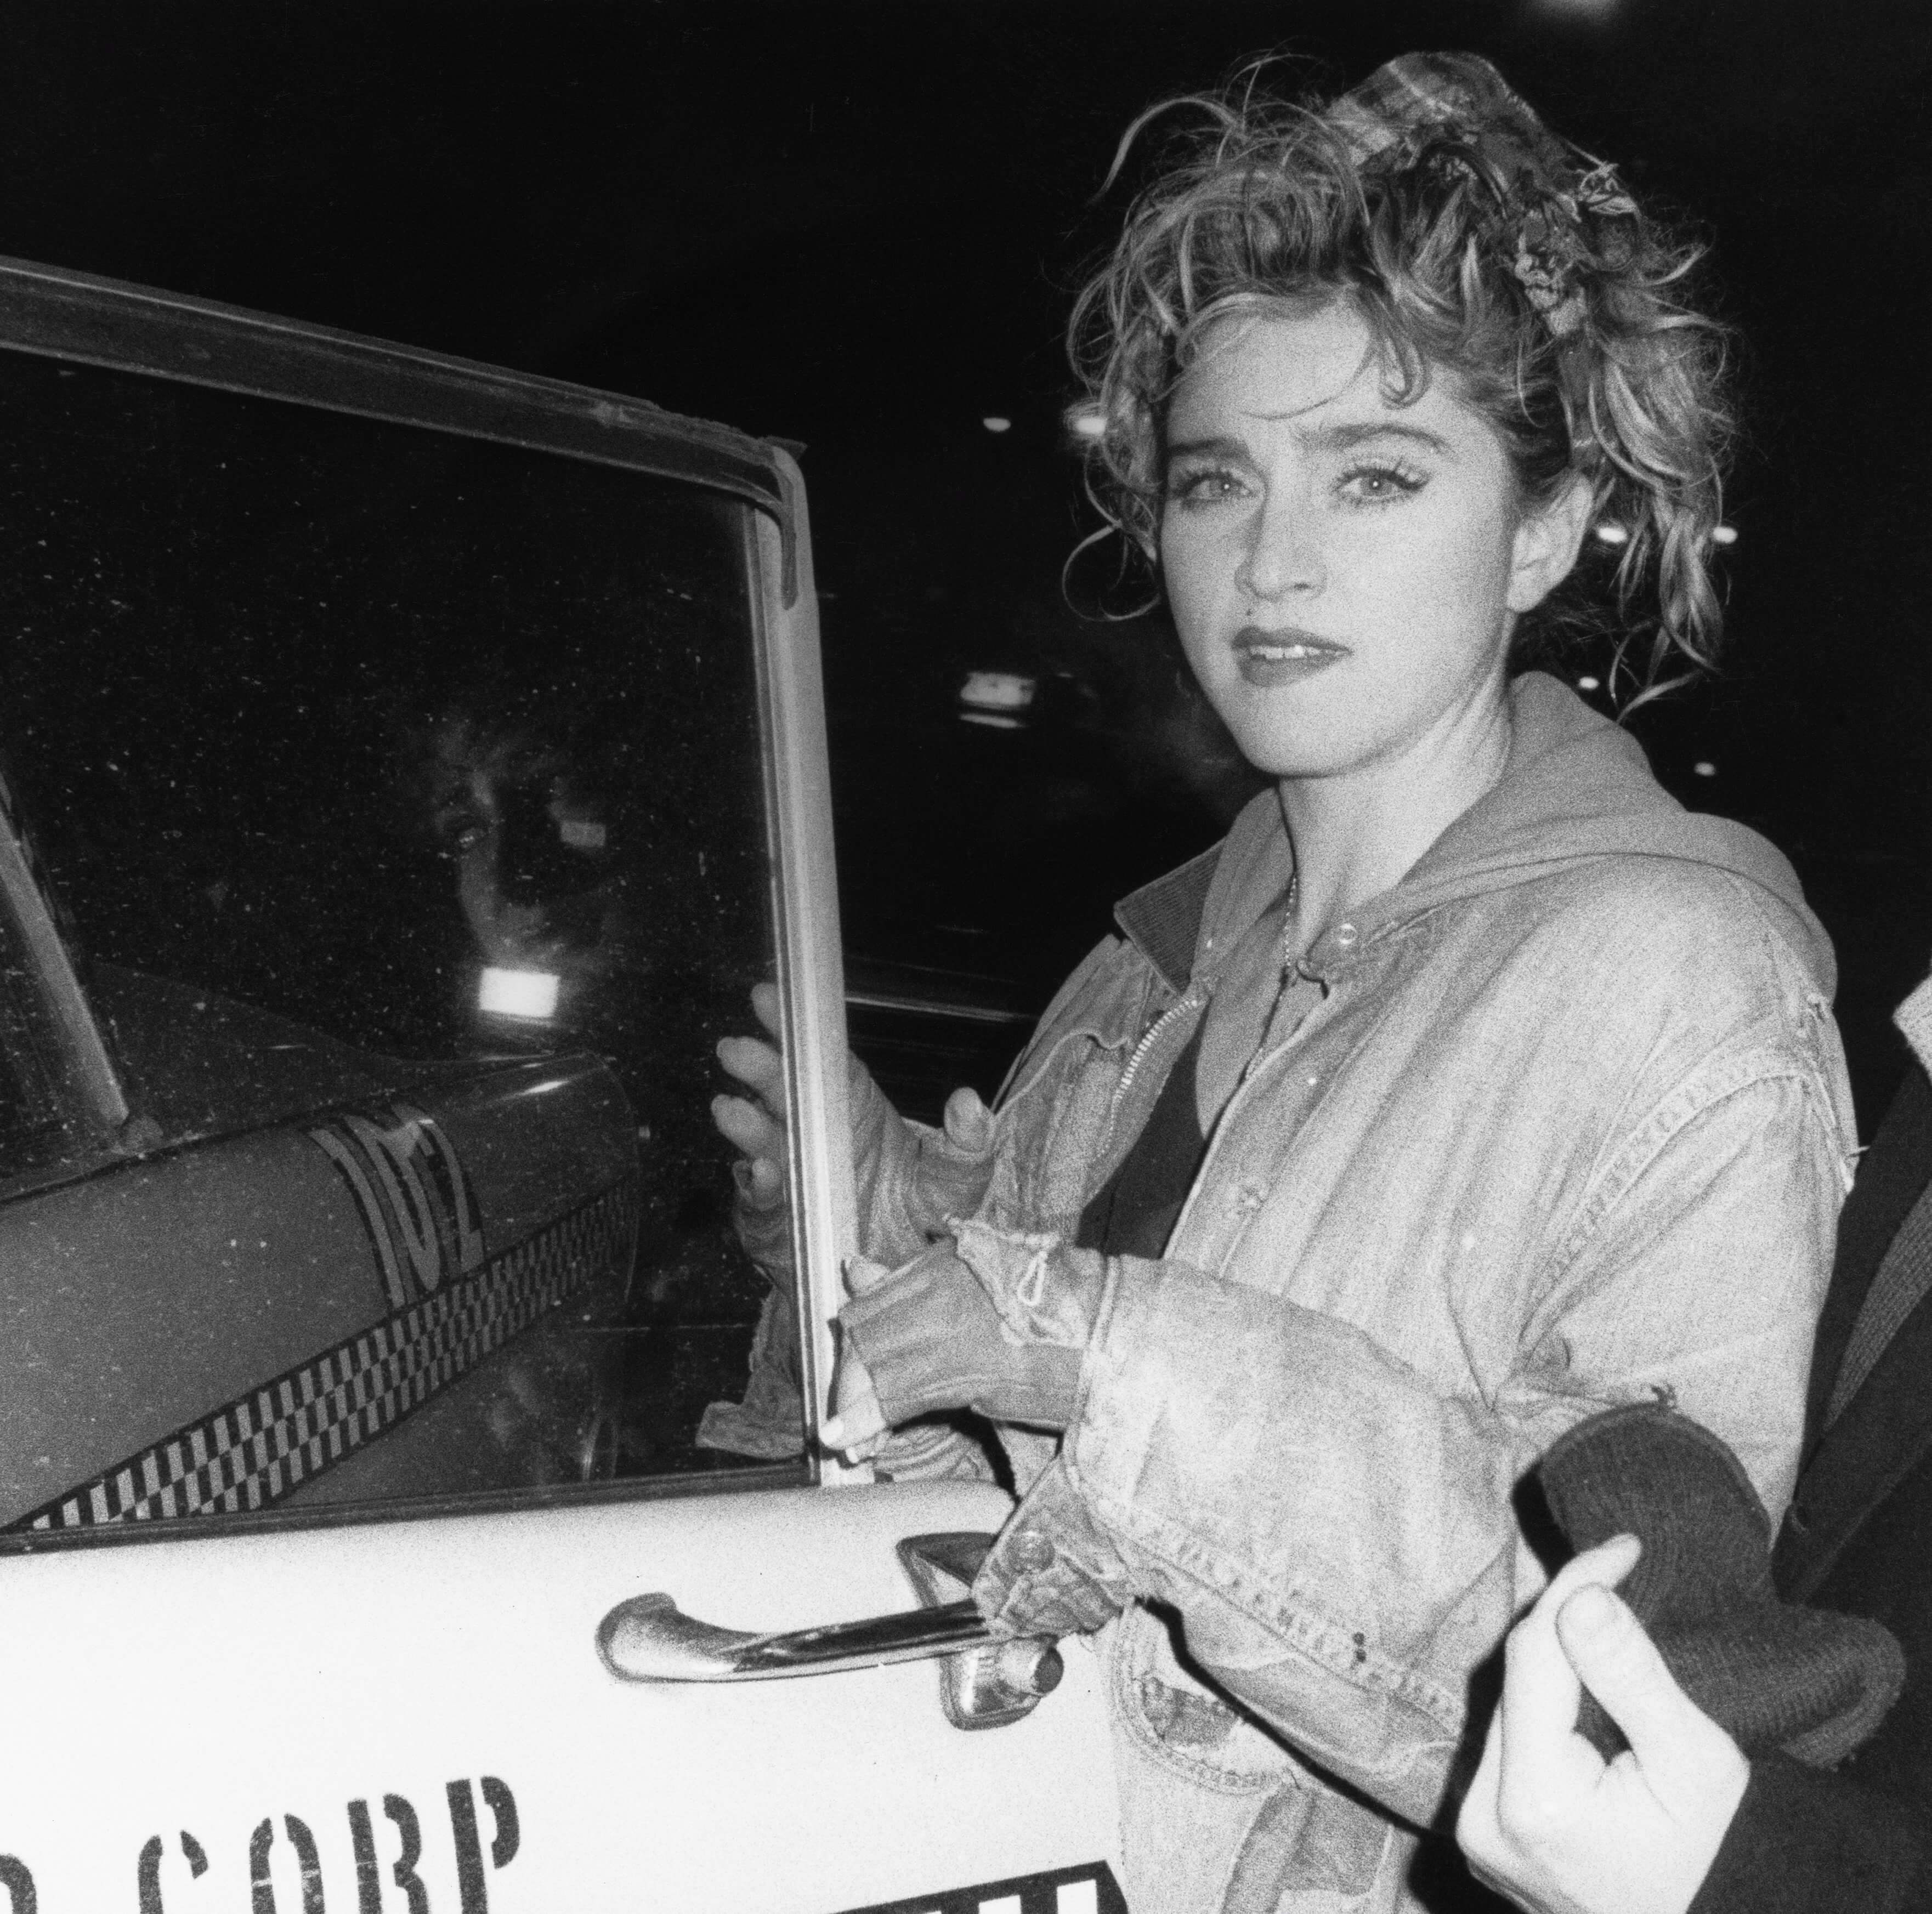 "Dress You Up" singer Madonna and a car